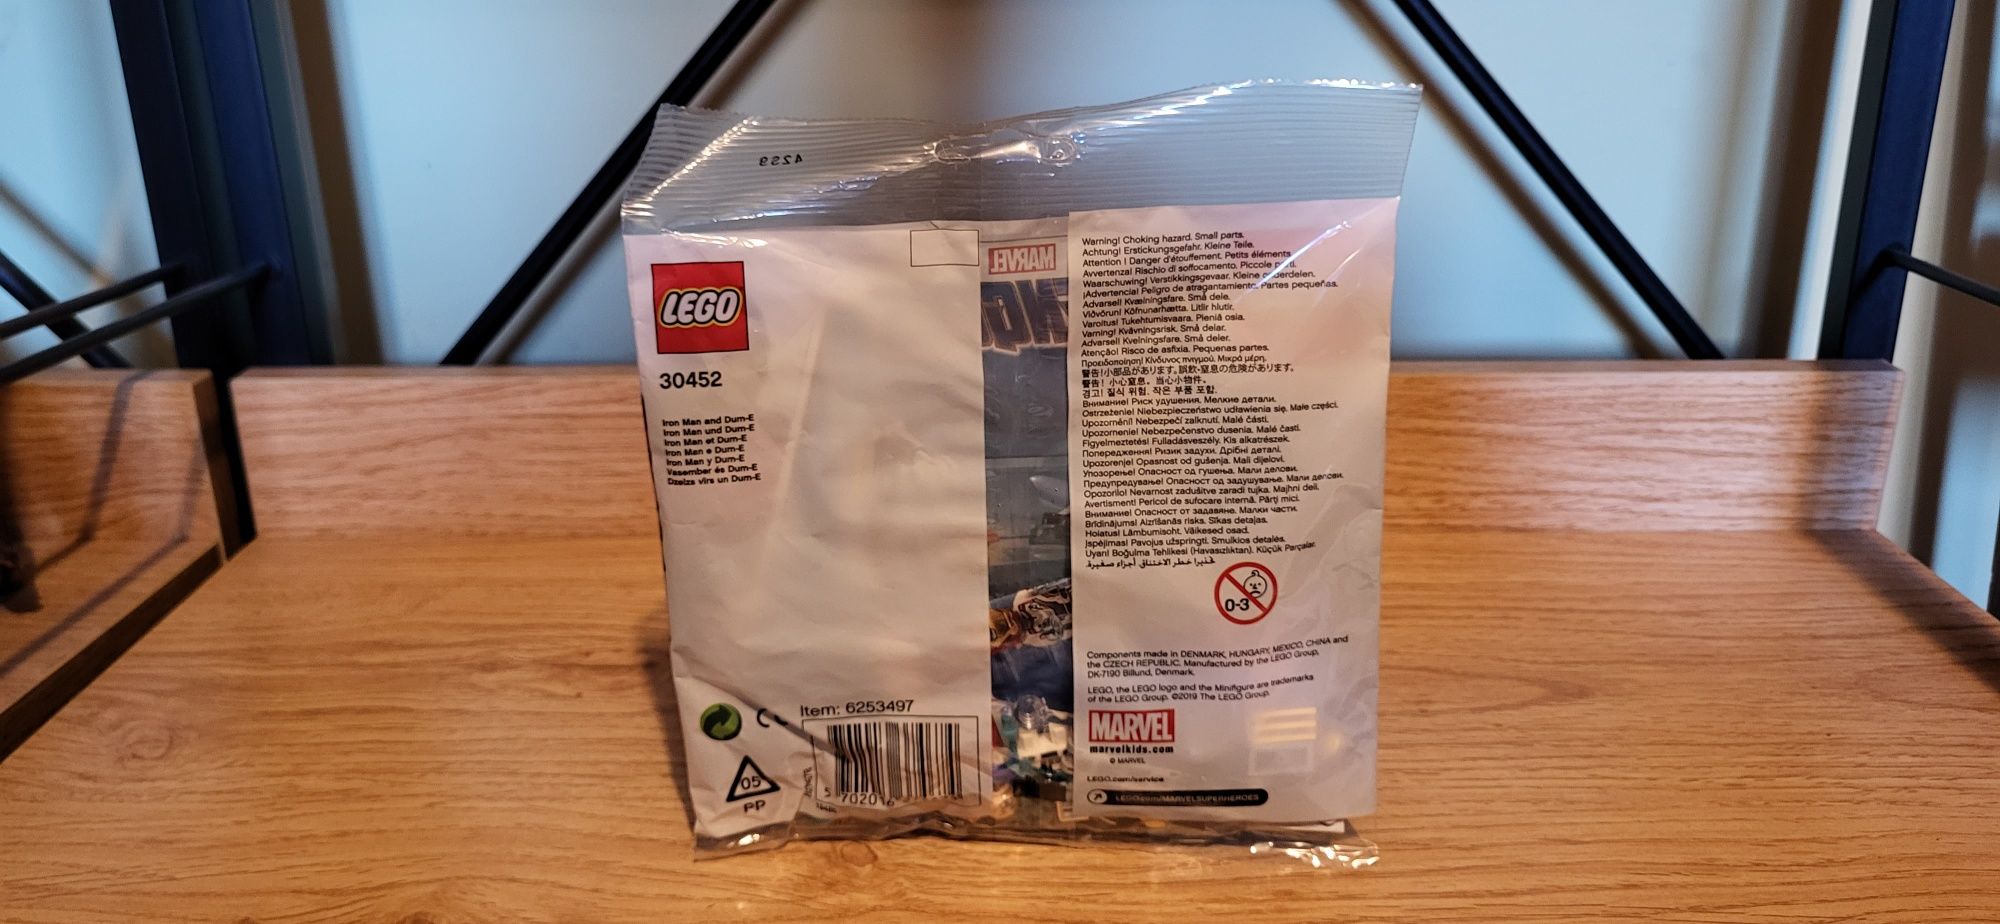 Lego Marvel Avengers 30452 Iron Man i Dum-E saszetka z klockami